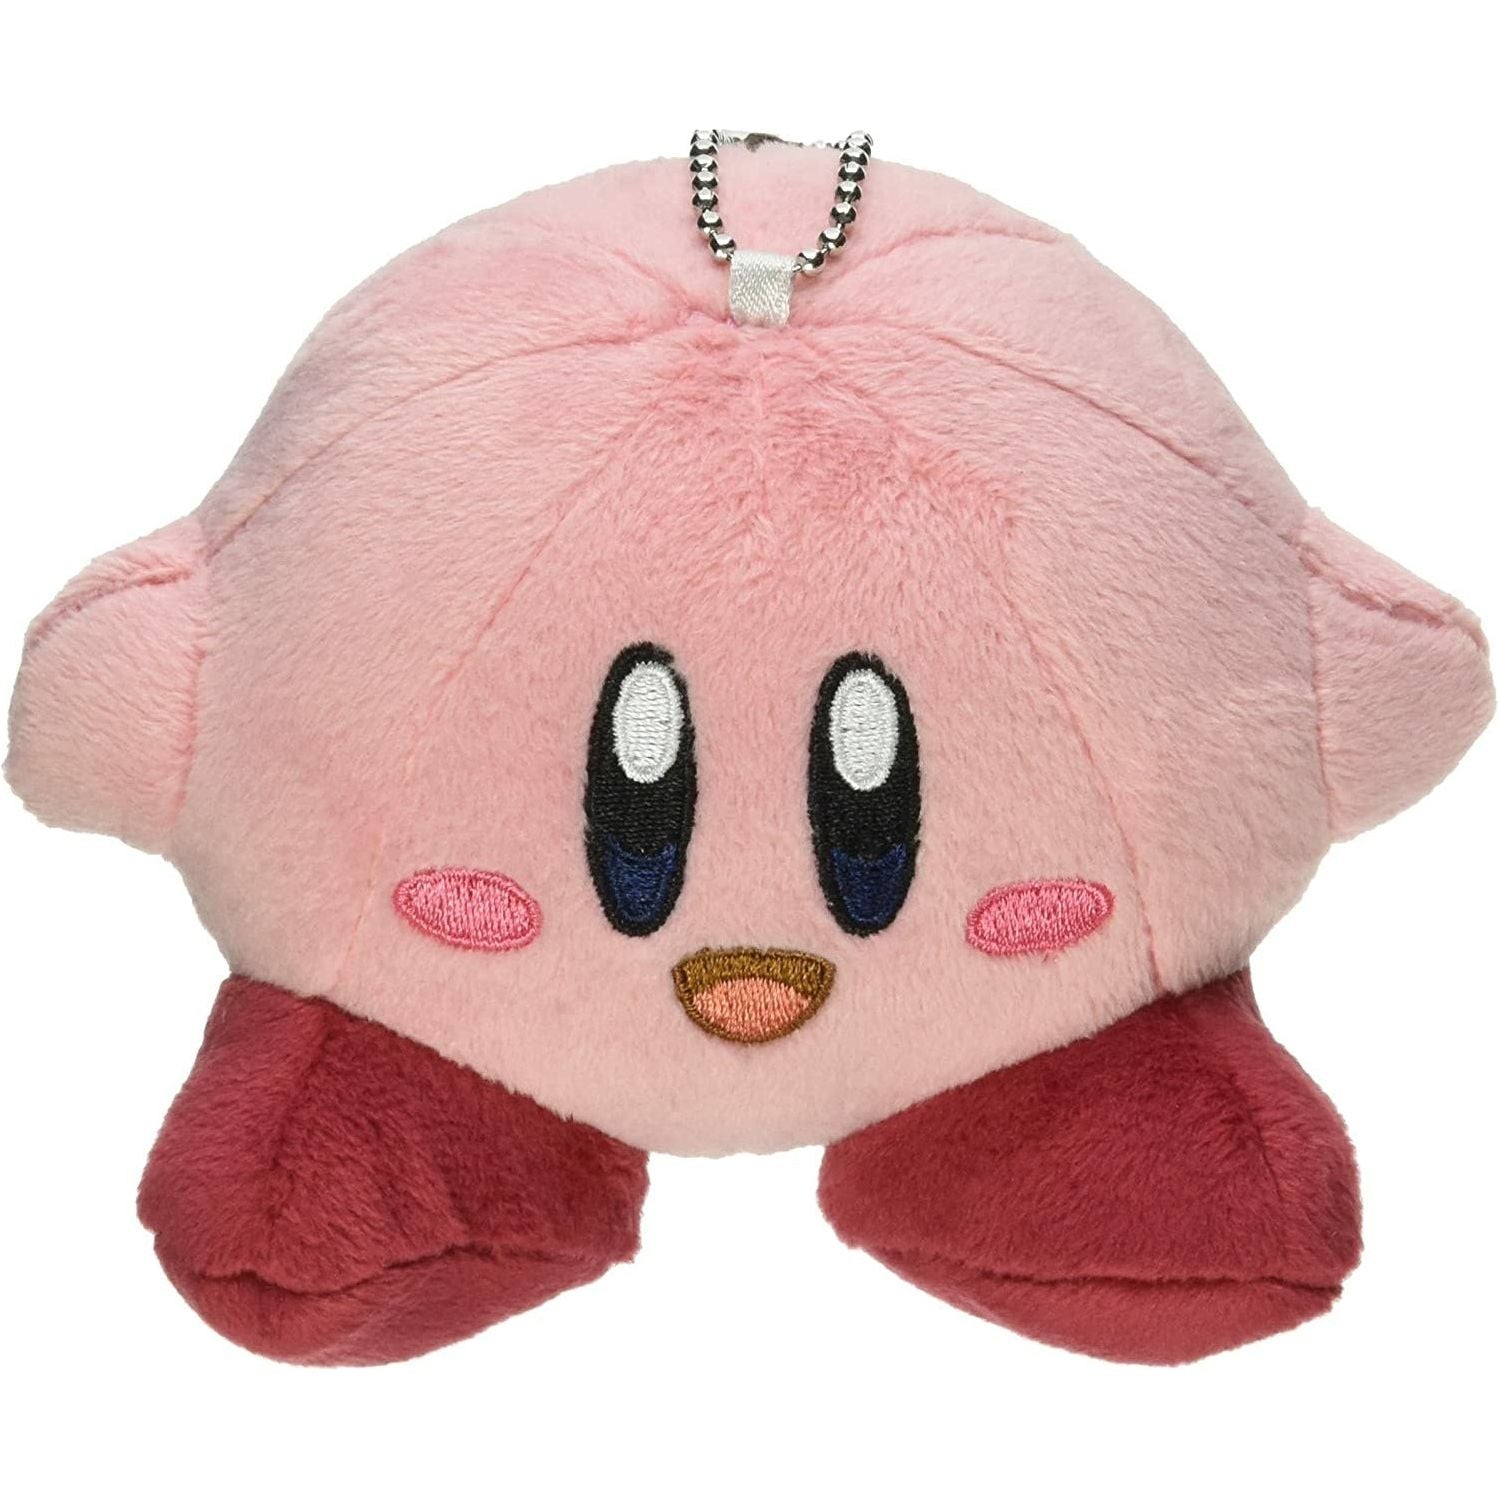 Kirby Plush 2.5 Inch